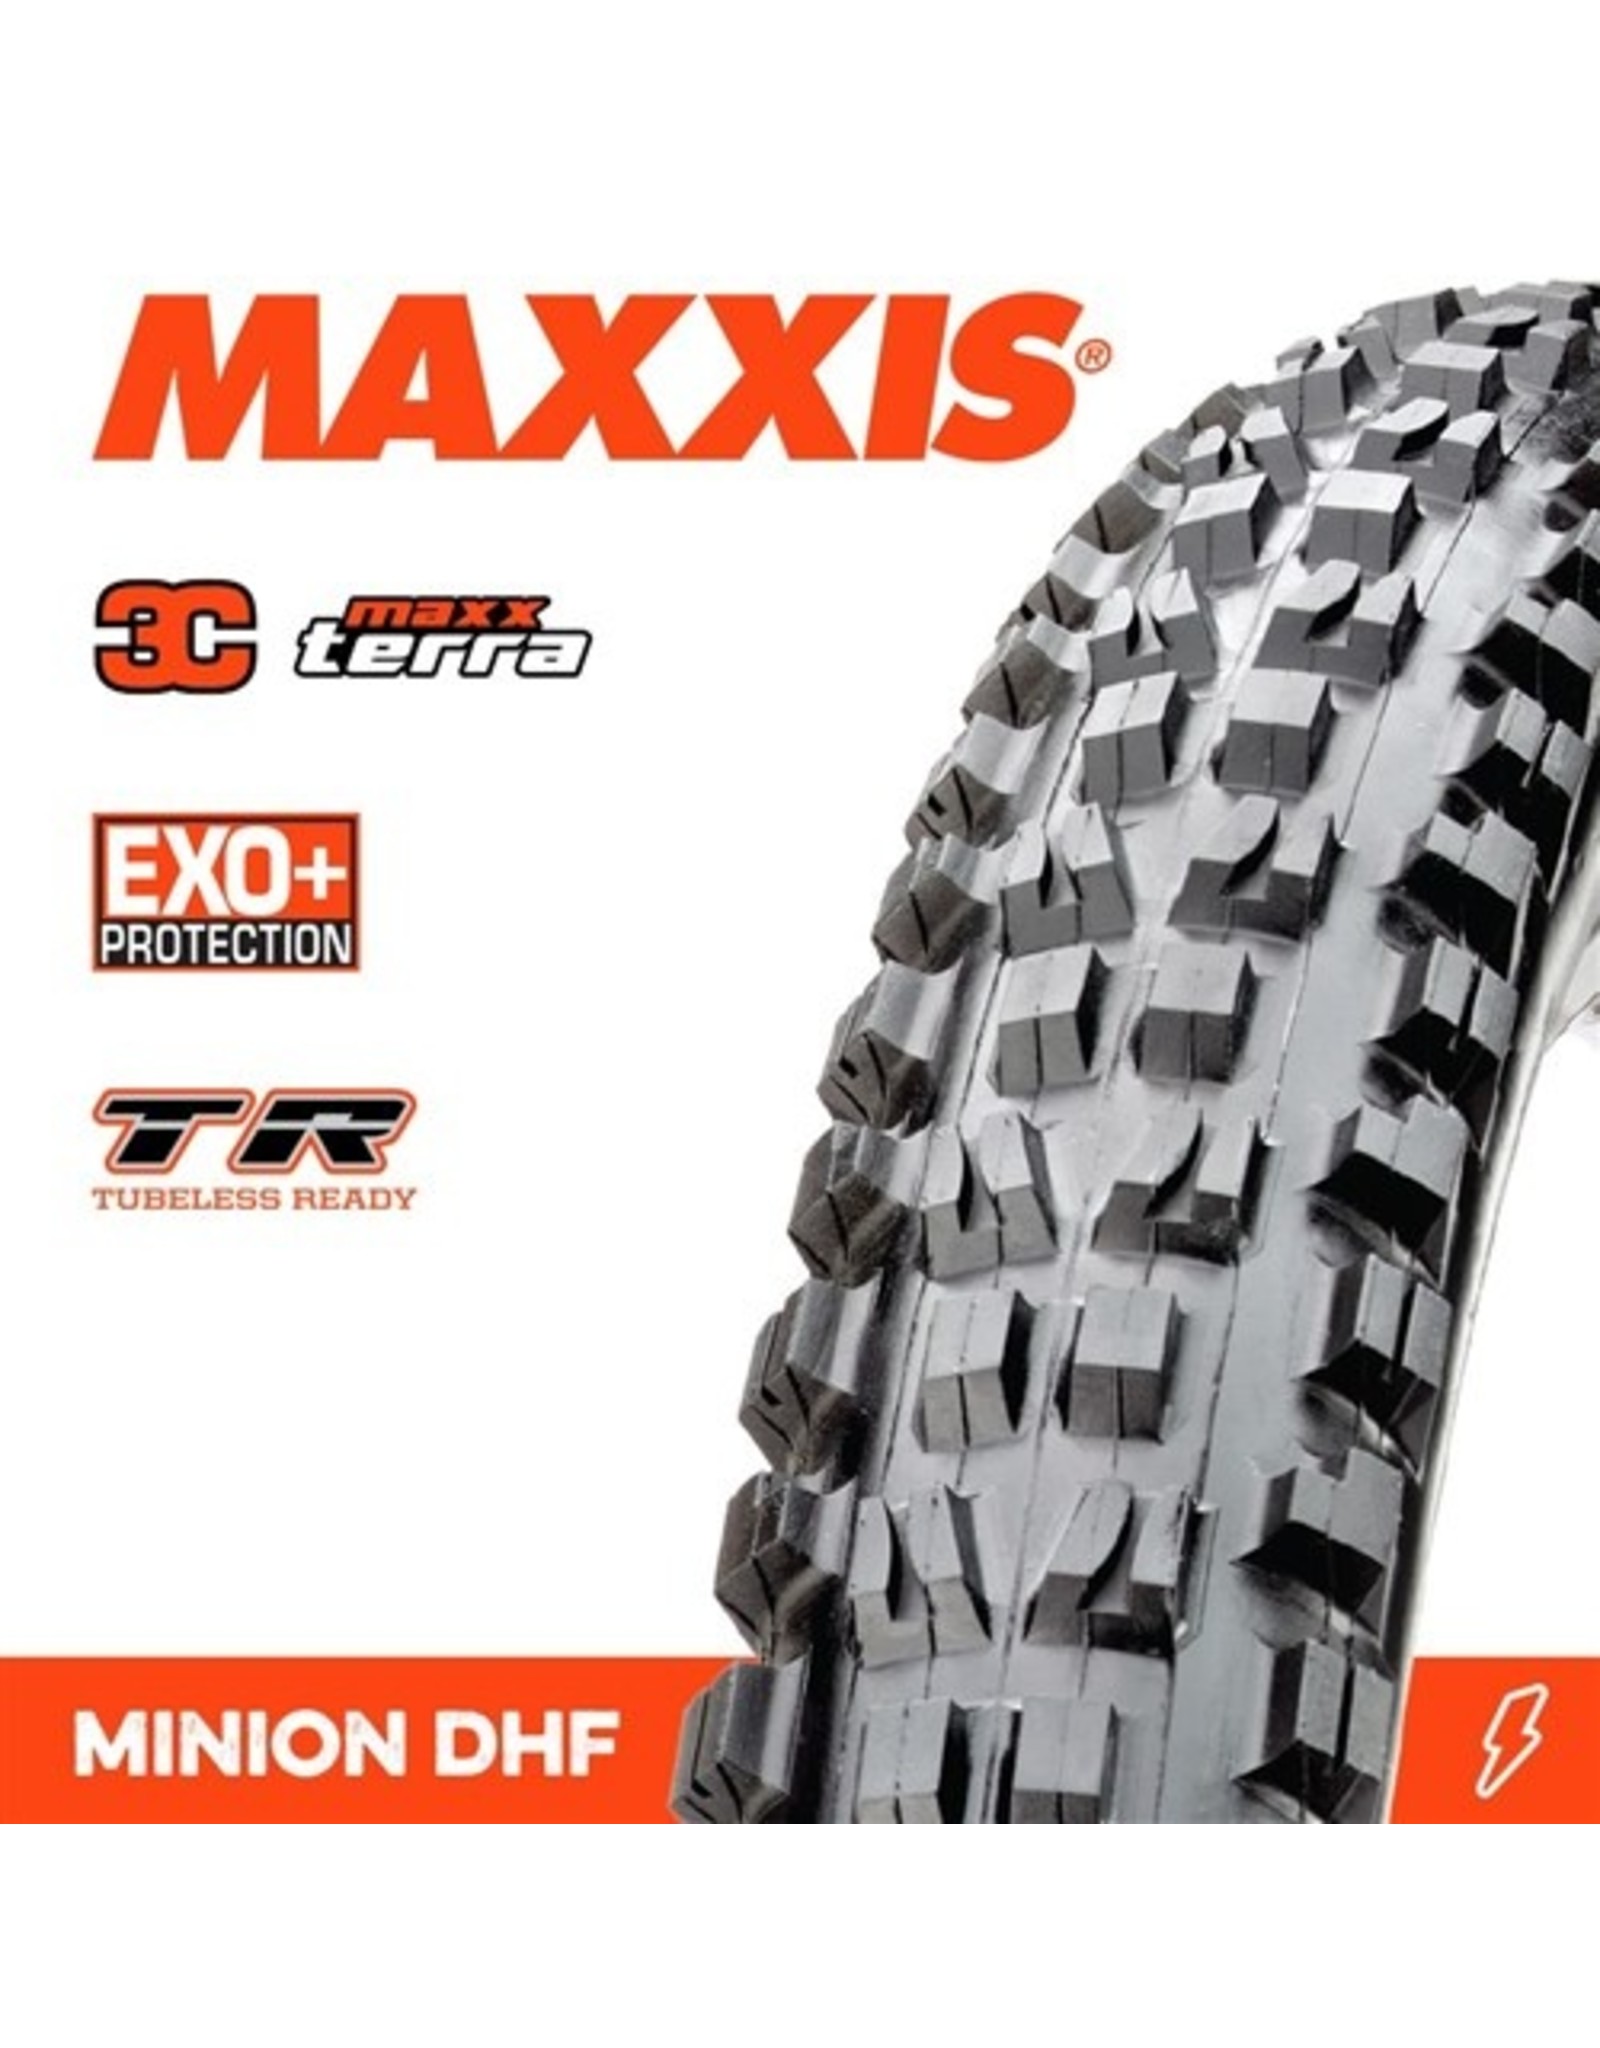 Maxxis MAXXIS MINION DHF EXO+